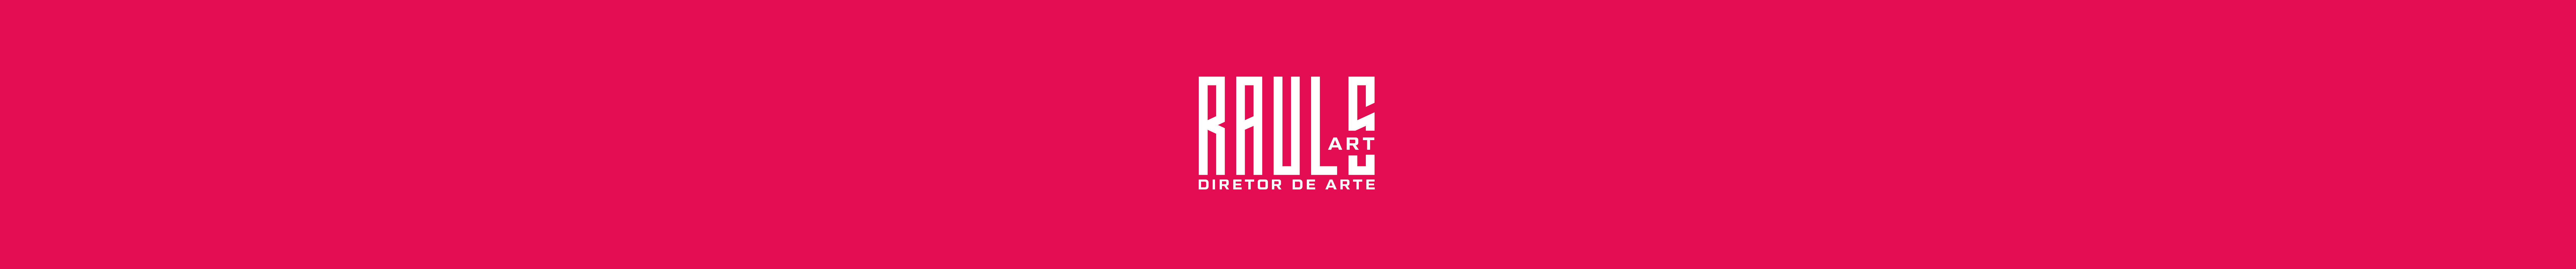 Raul Santos's profile banner